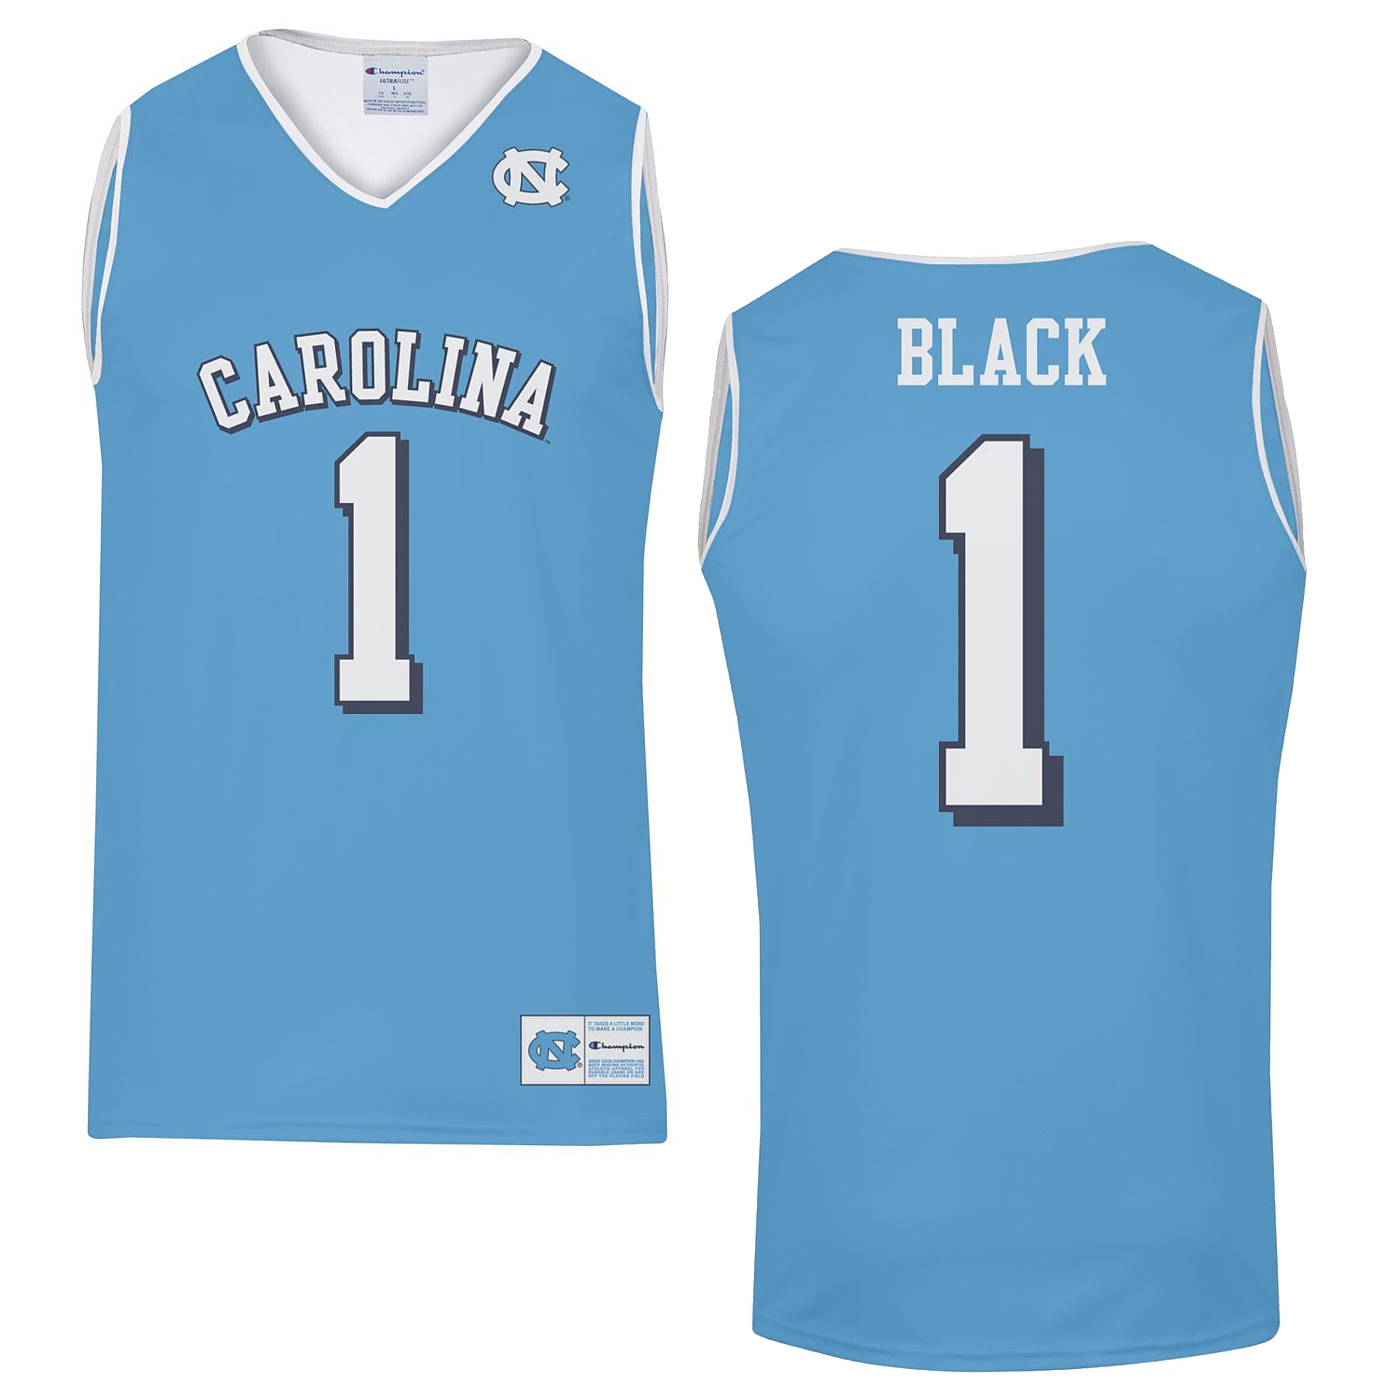 Johnny T-shirt - North Carolina Tar Heels - Leaky Black #1 Sublimated Basketball  Jersey (CB) by Champion